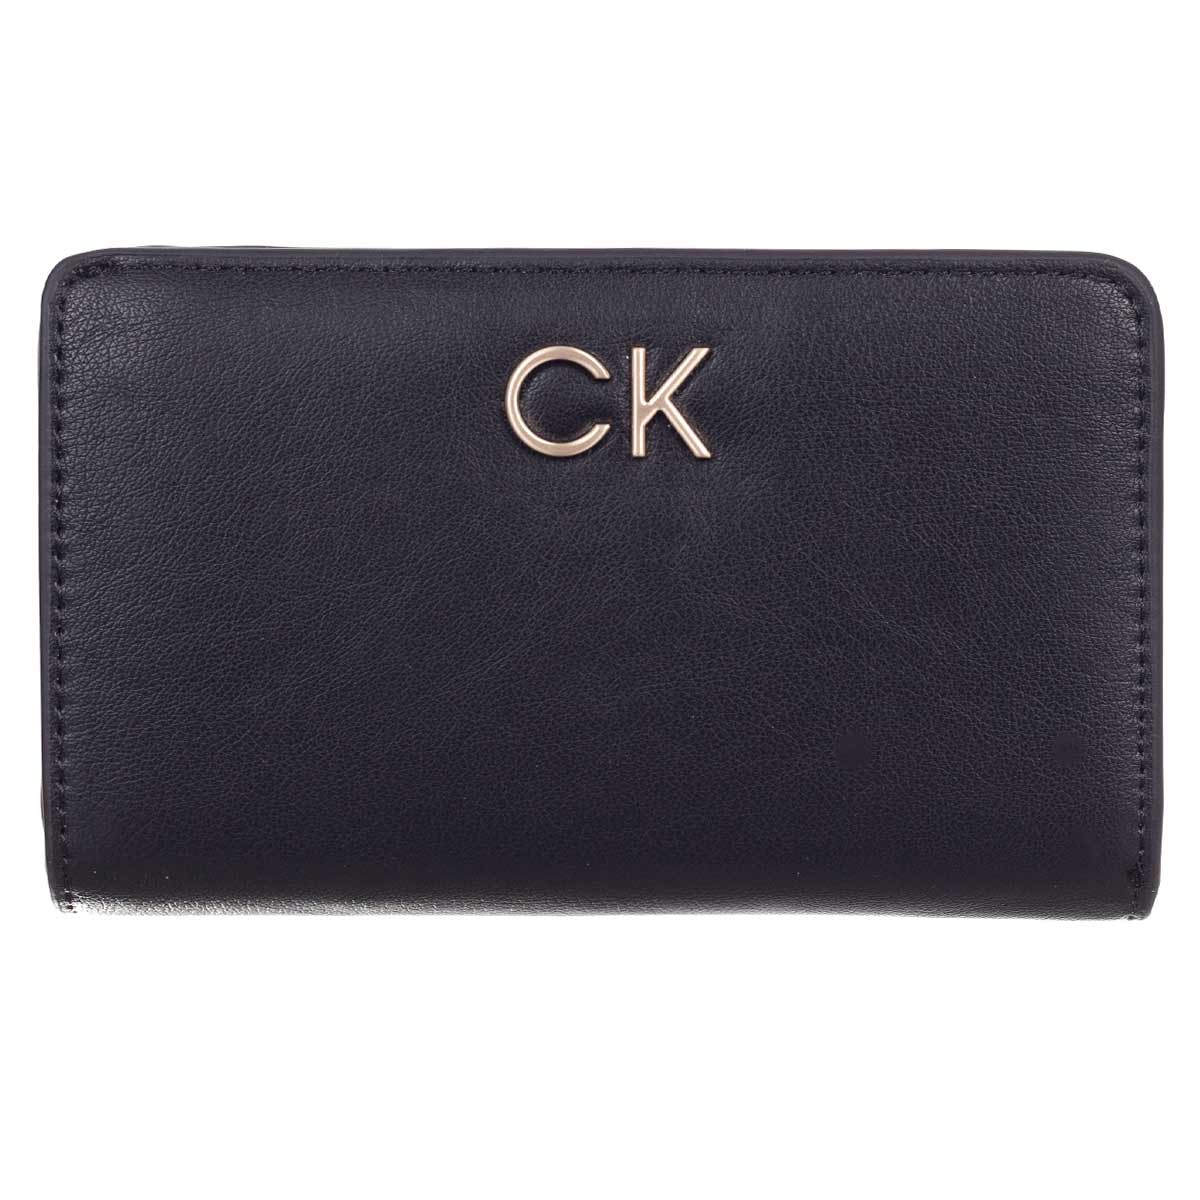 Calvin Klein Woman's Wallet 5905655074923